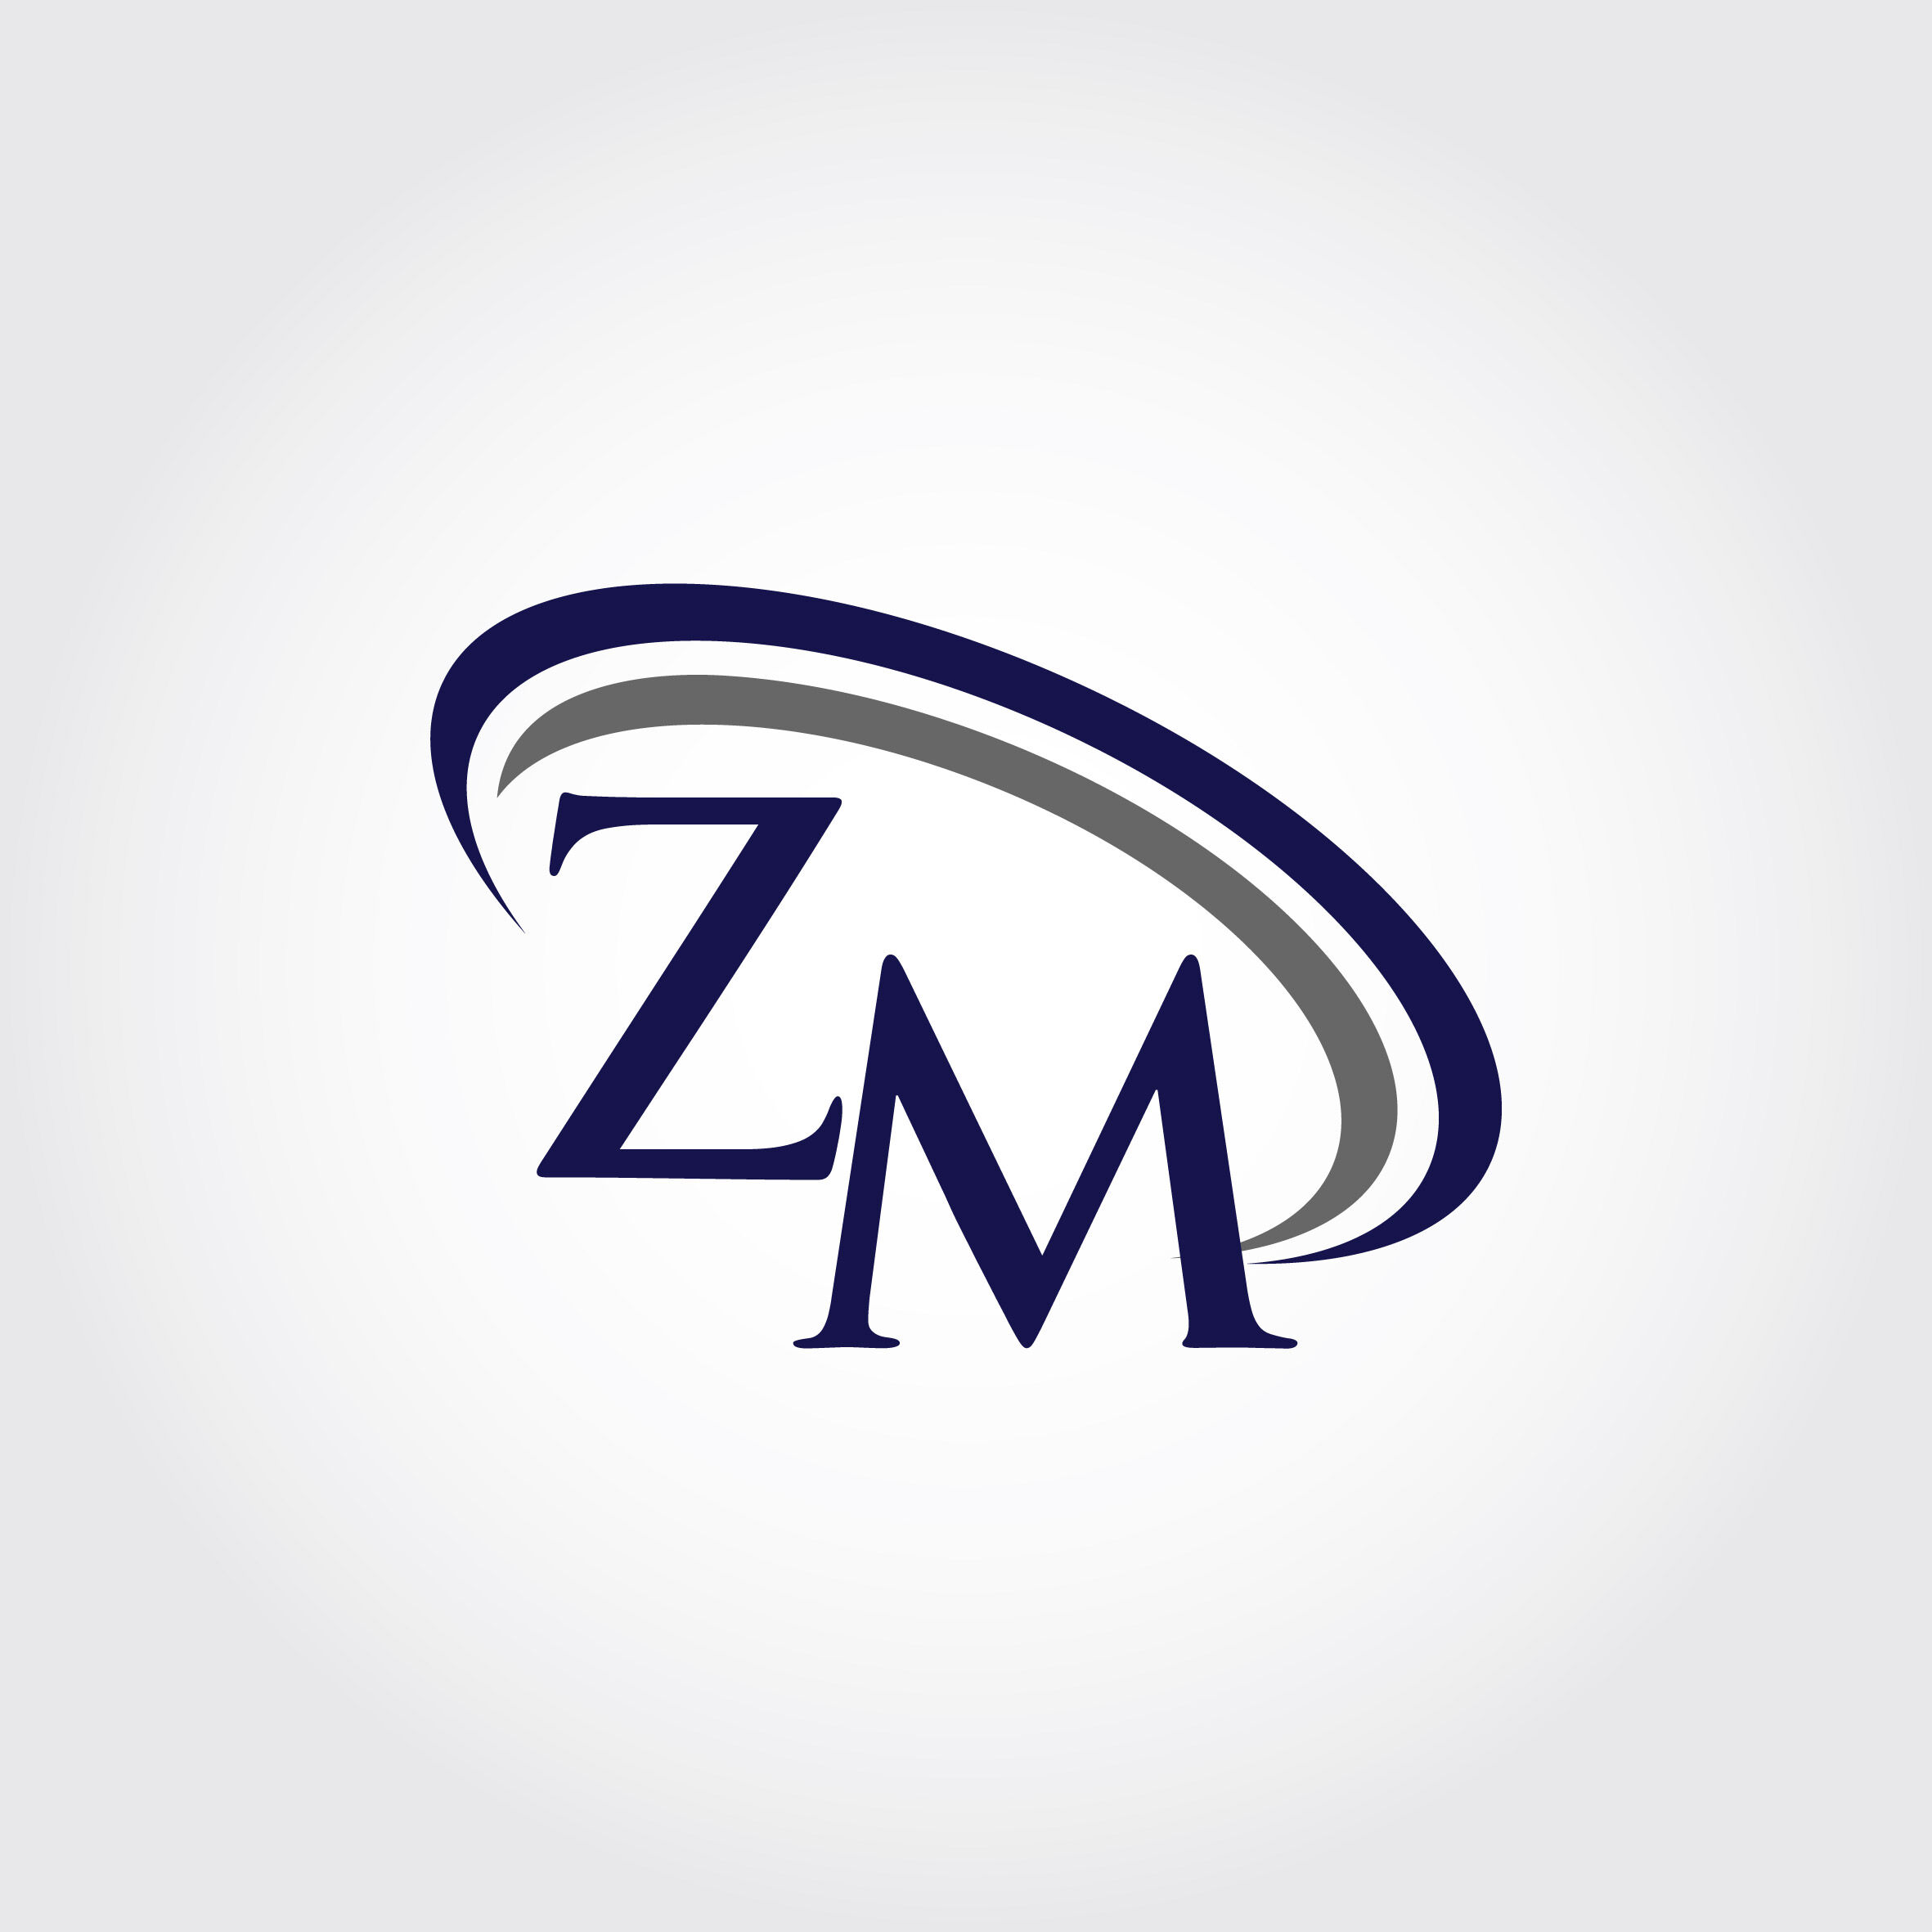 Monogram Zm Logo Design By Vectorseller Thehungryjpeg Com